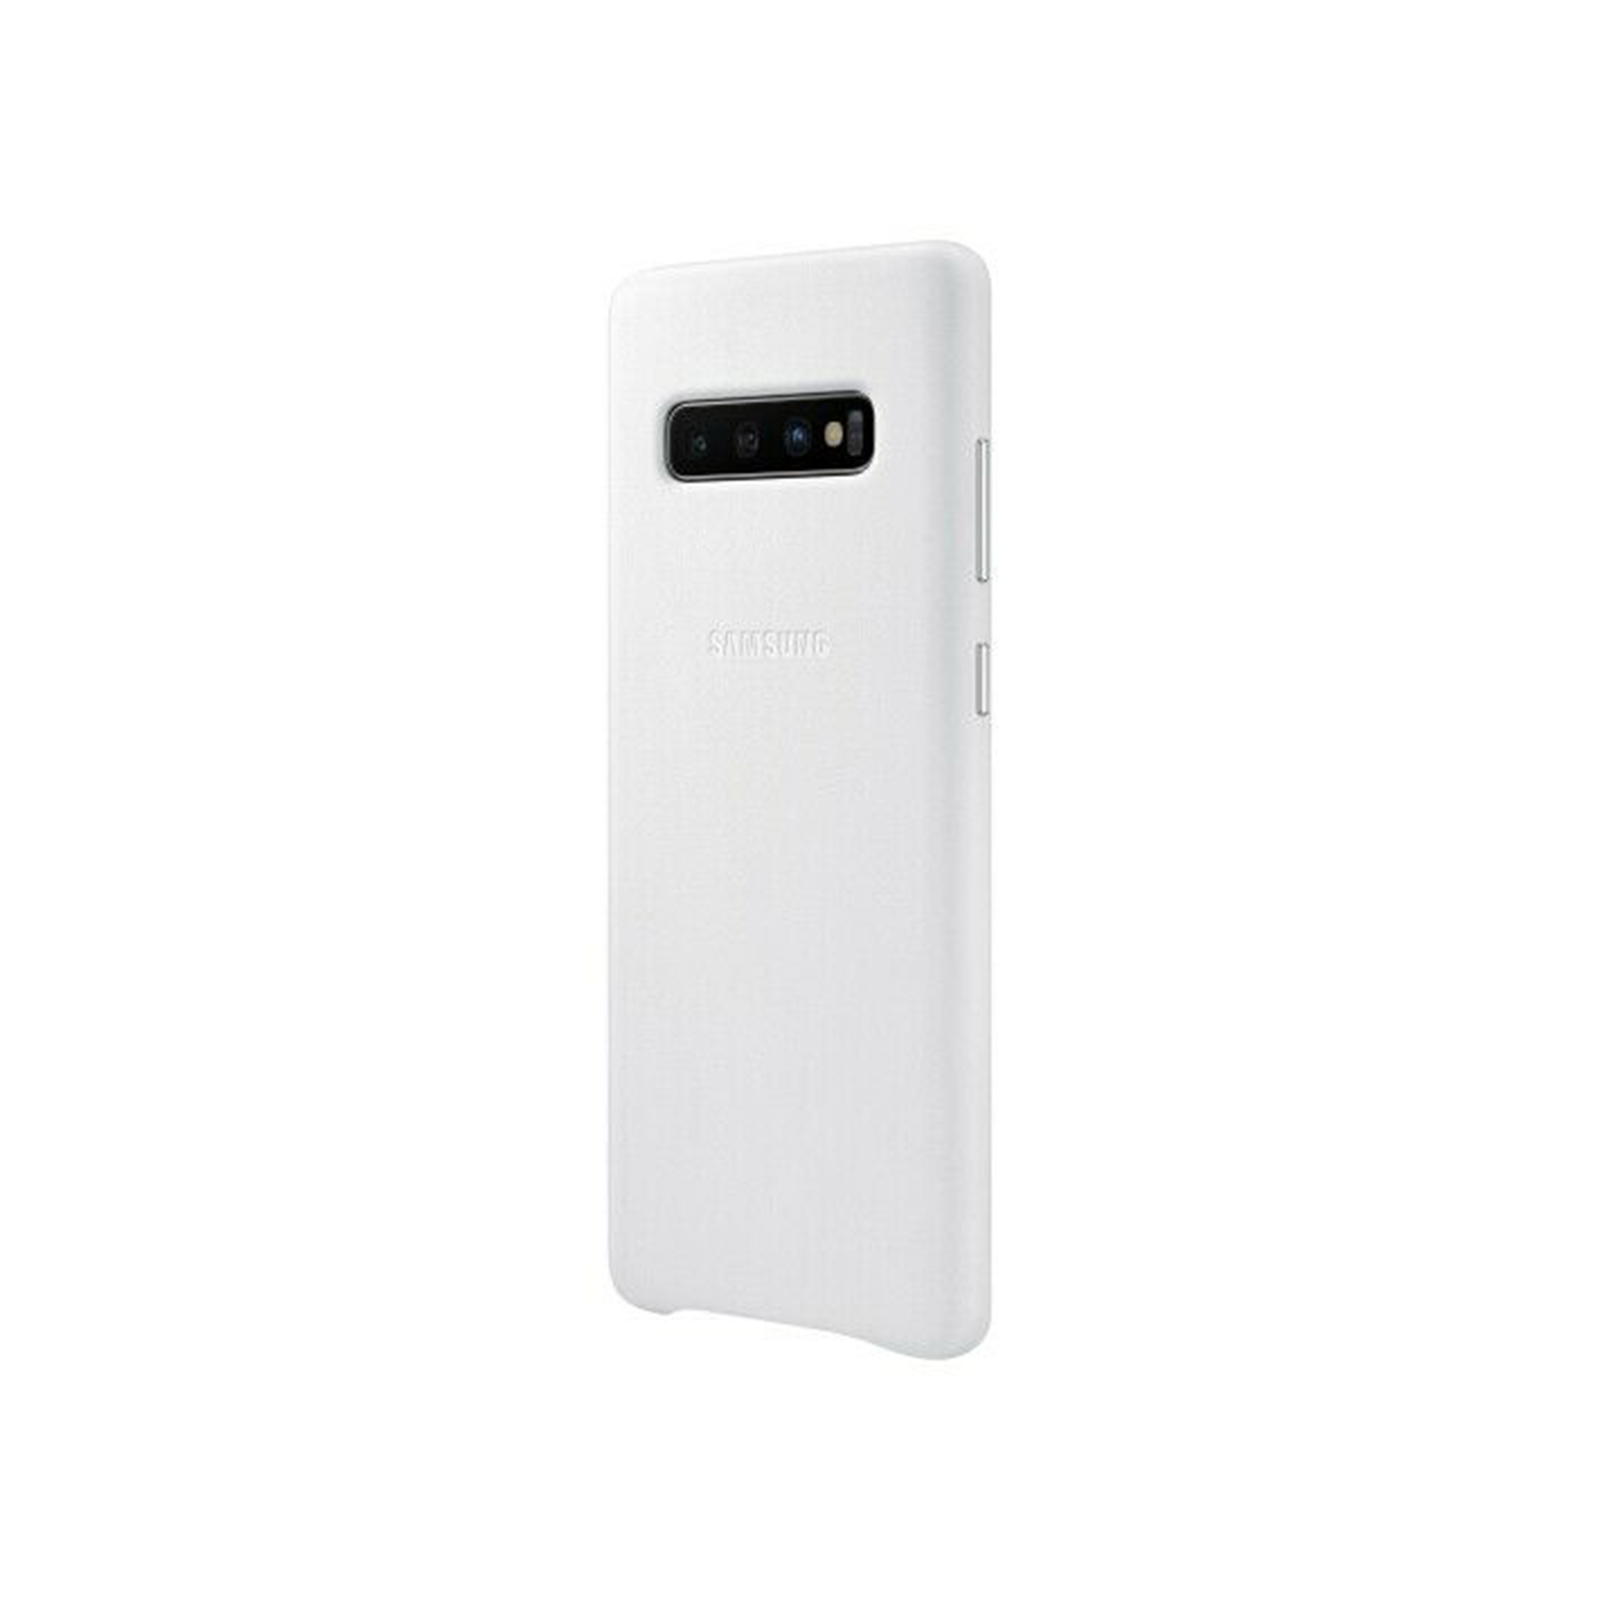 COVER Galaxy EF-VG975LWEGWW S10+ SAMSUNG Samsung, Backcover, WHITE, Weiß LEATHER S10+,